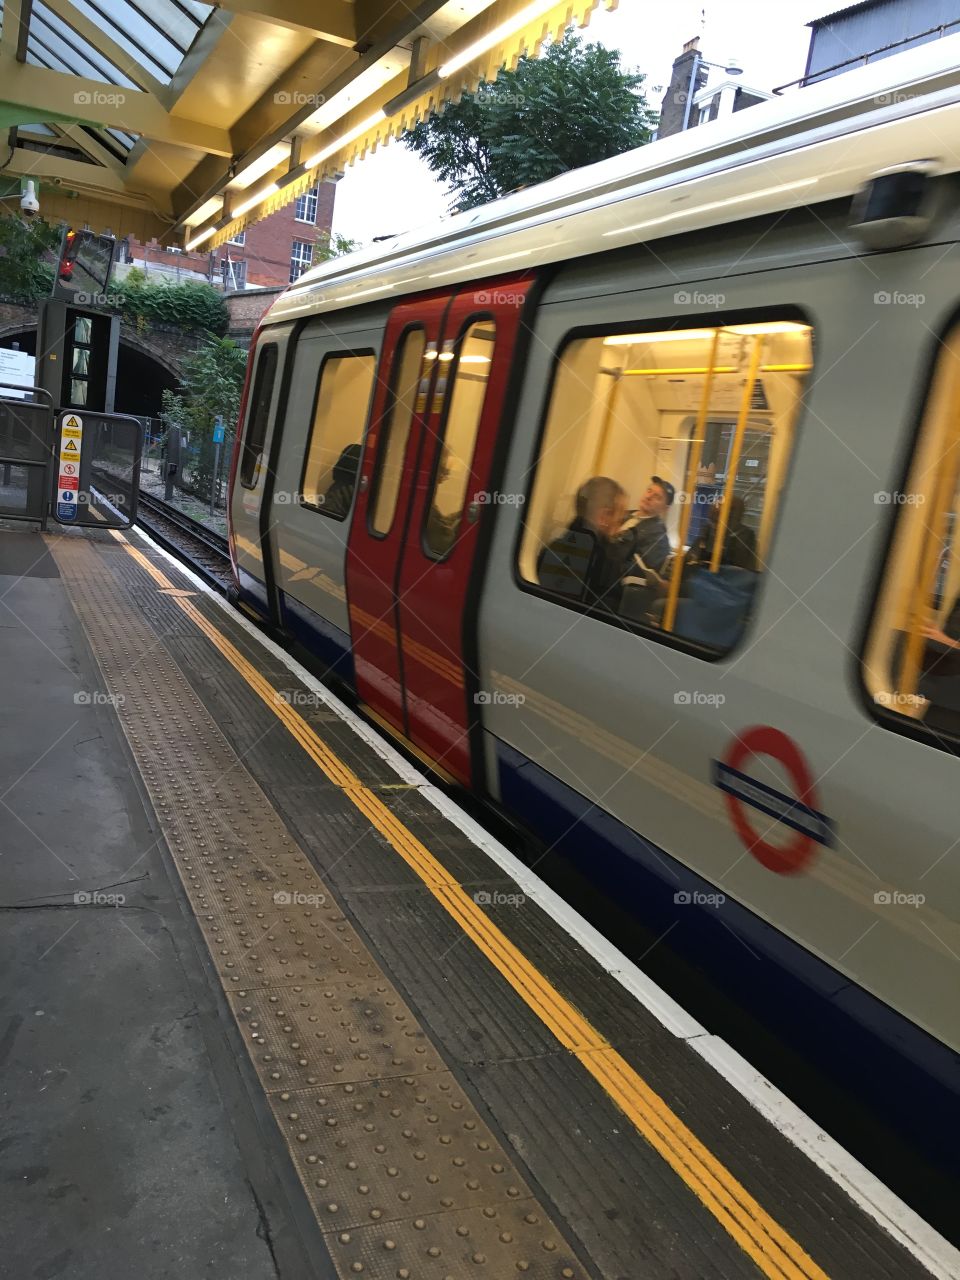 London tube 